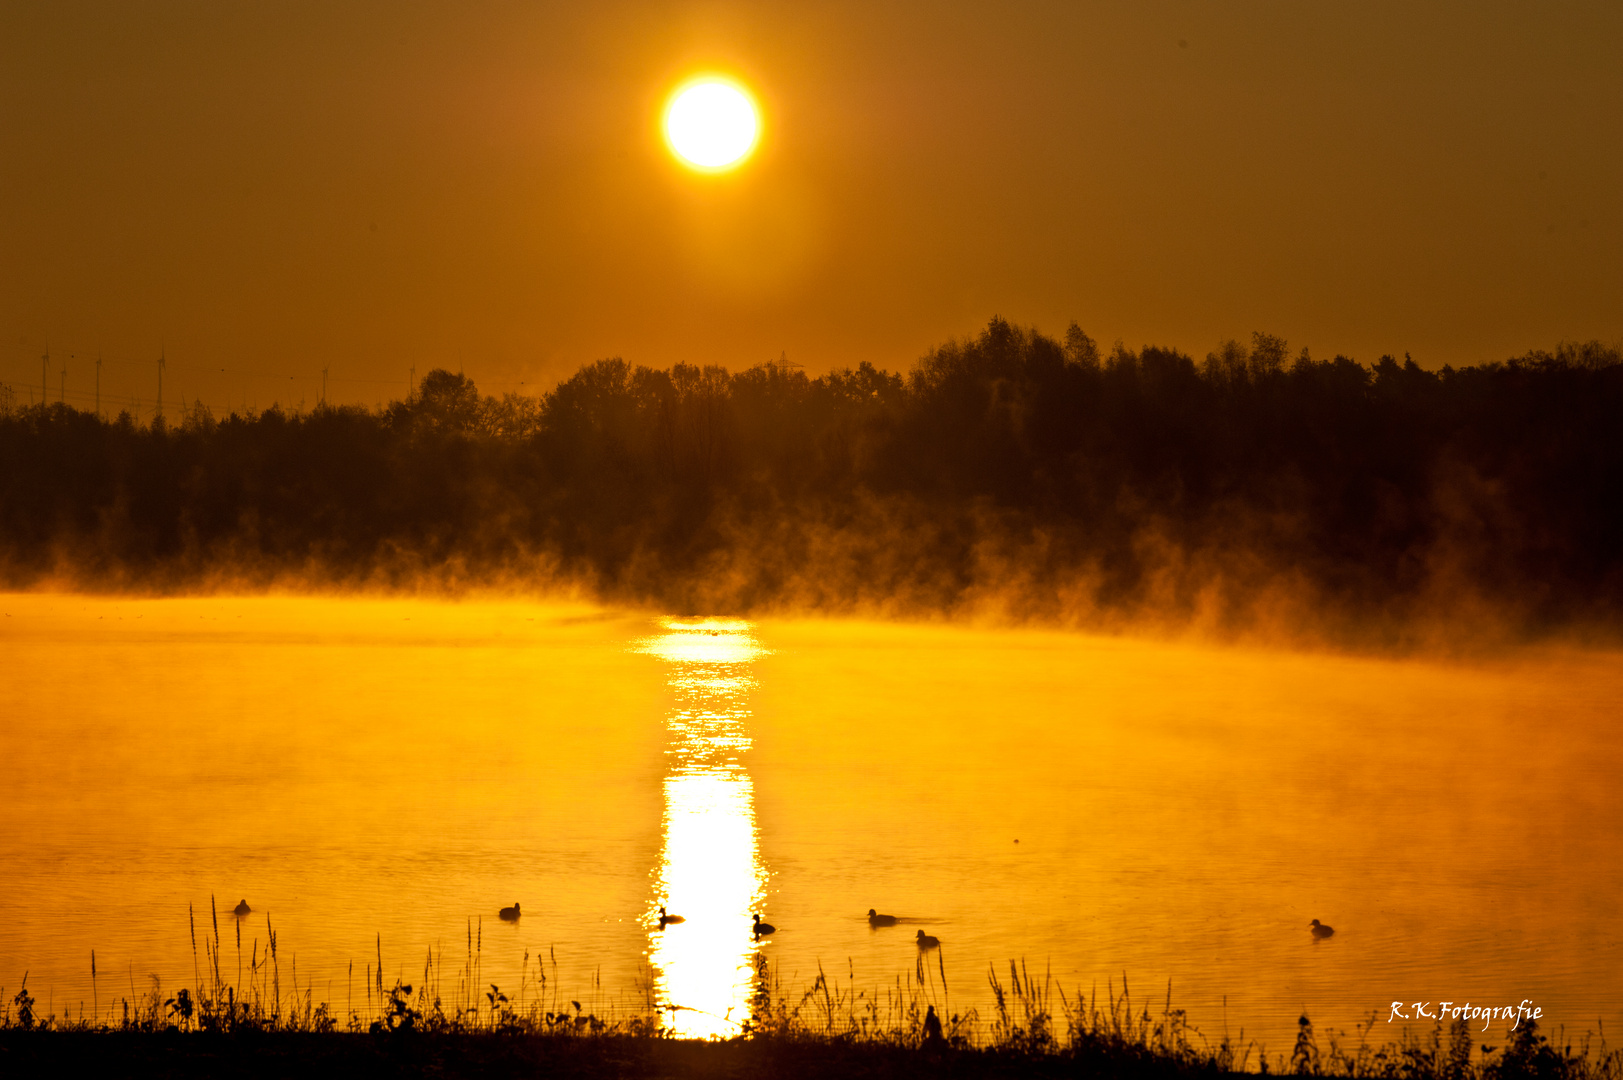 Sonnenaufgang am Lippesee